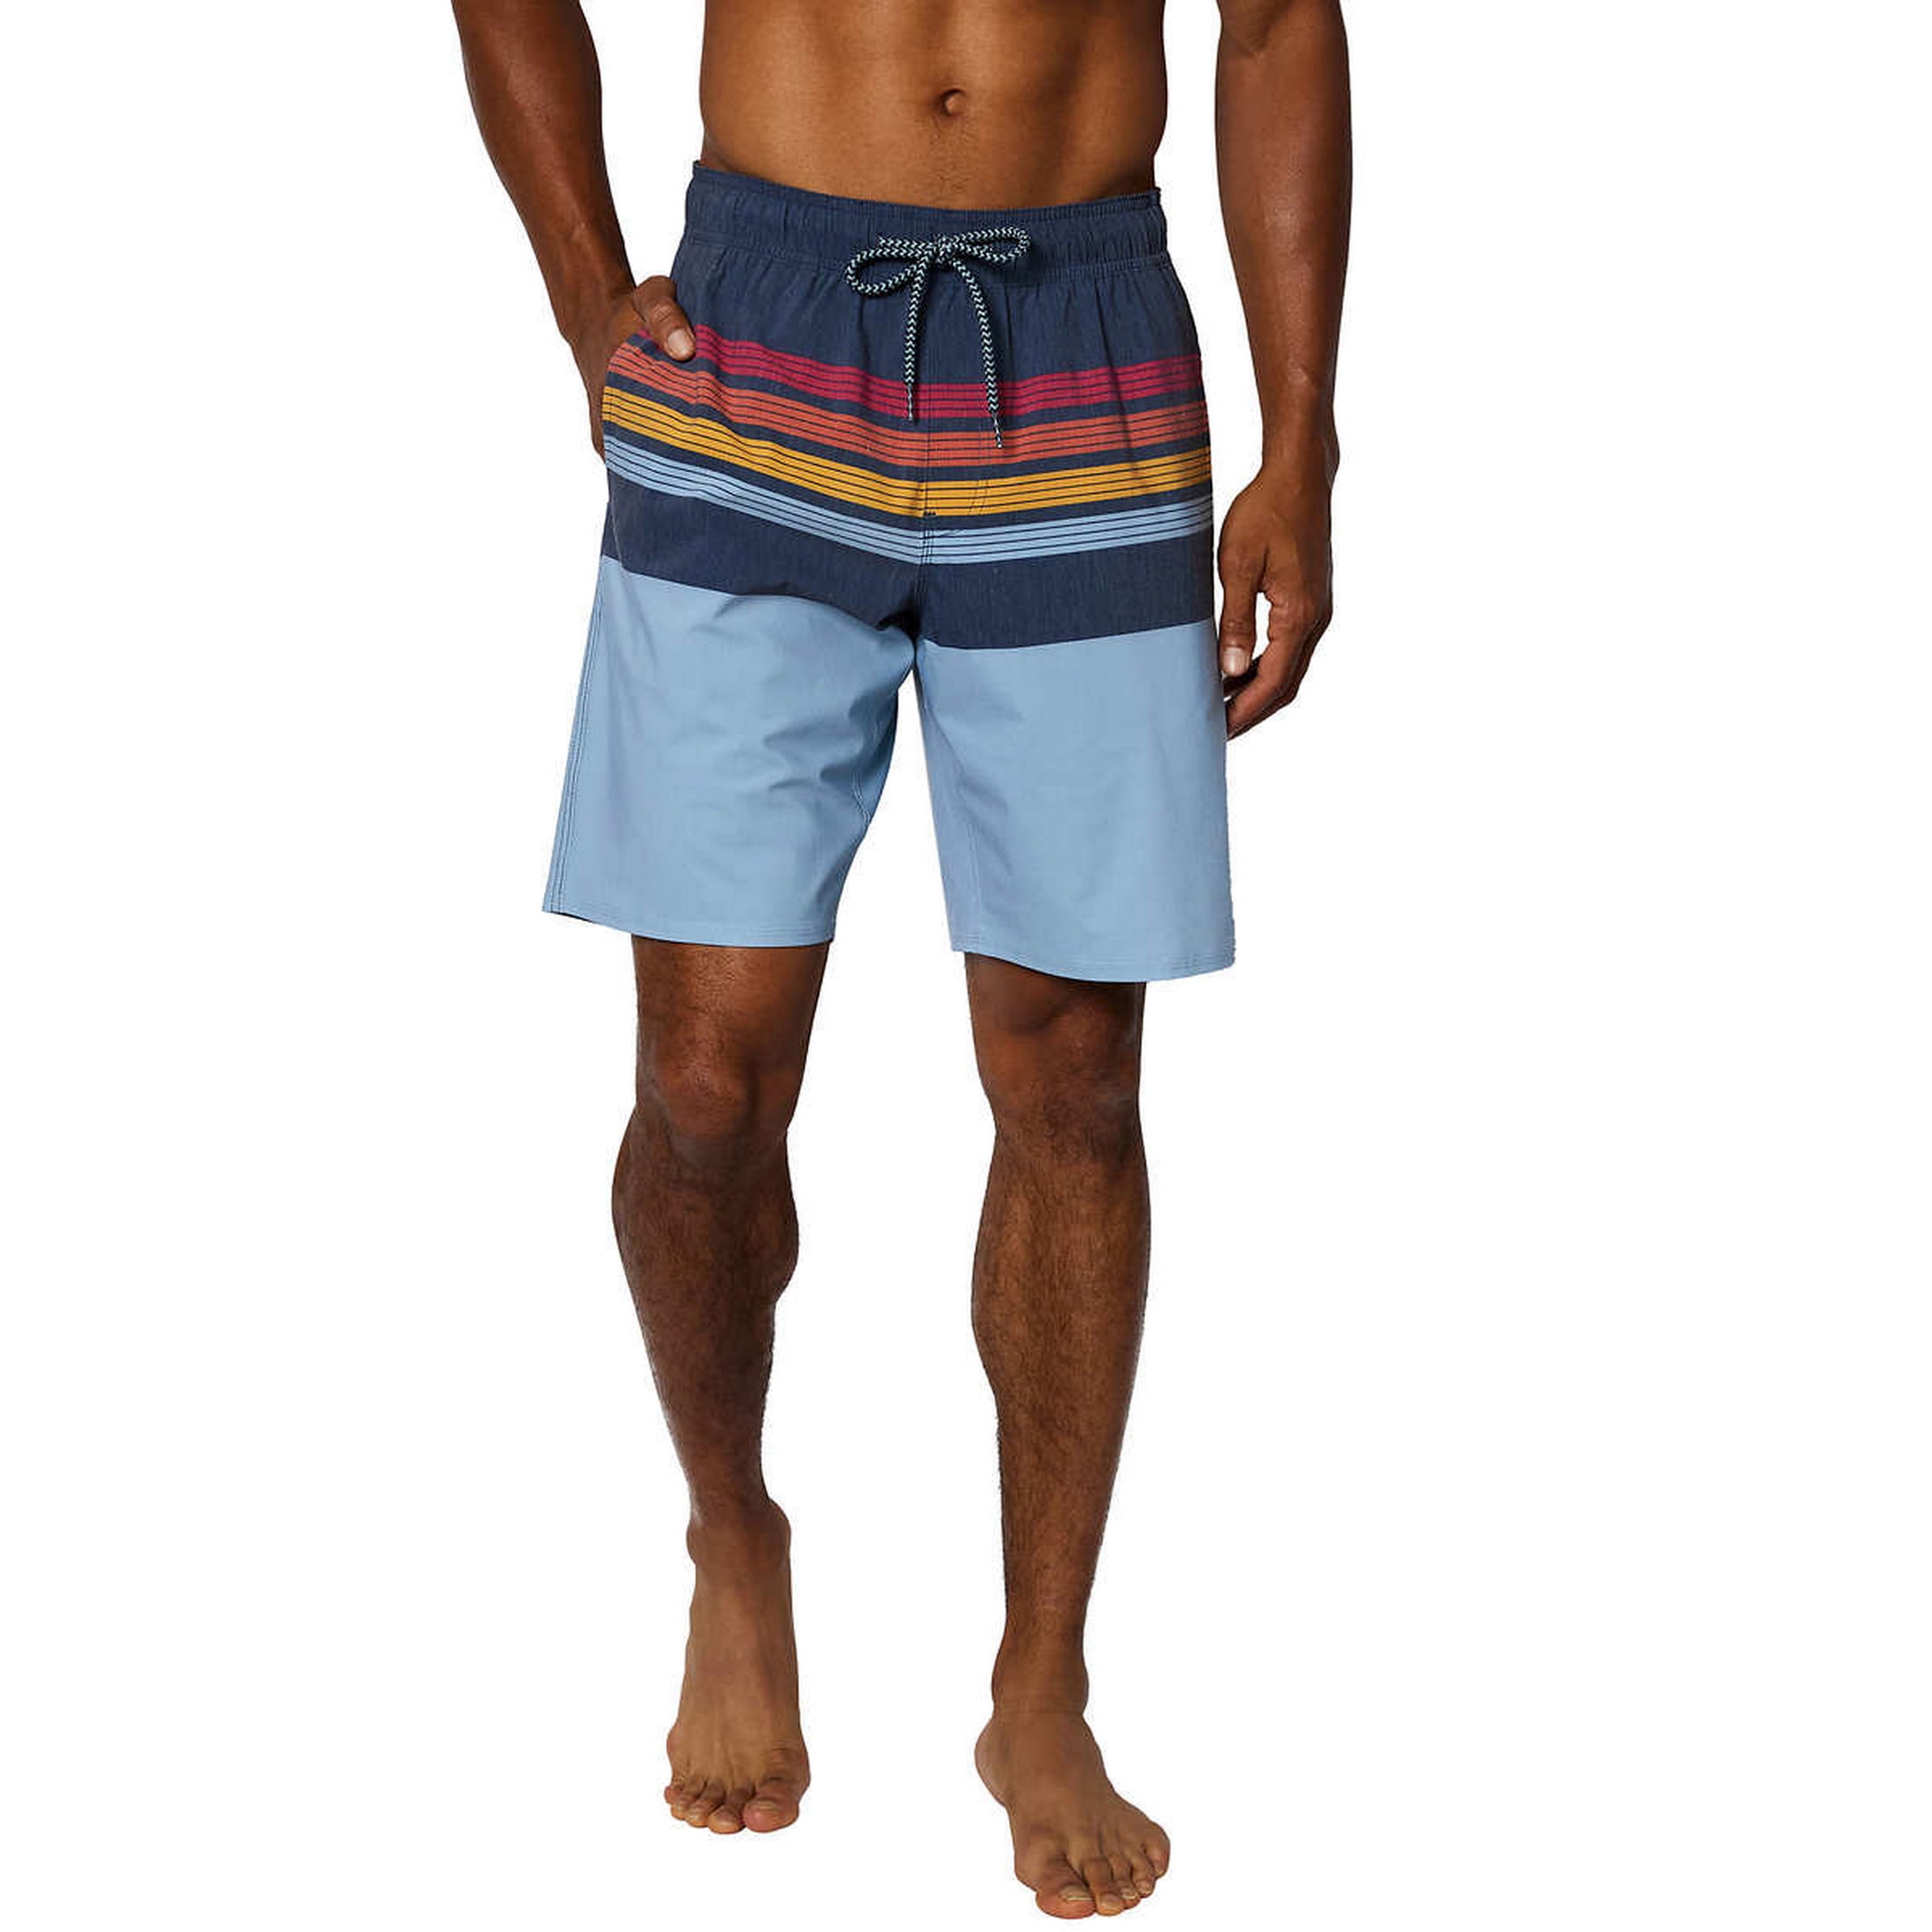 Hang Ten Swimwear Bottoms Male Blue Swim Shorts for Men, XXL - Walmart.com